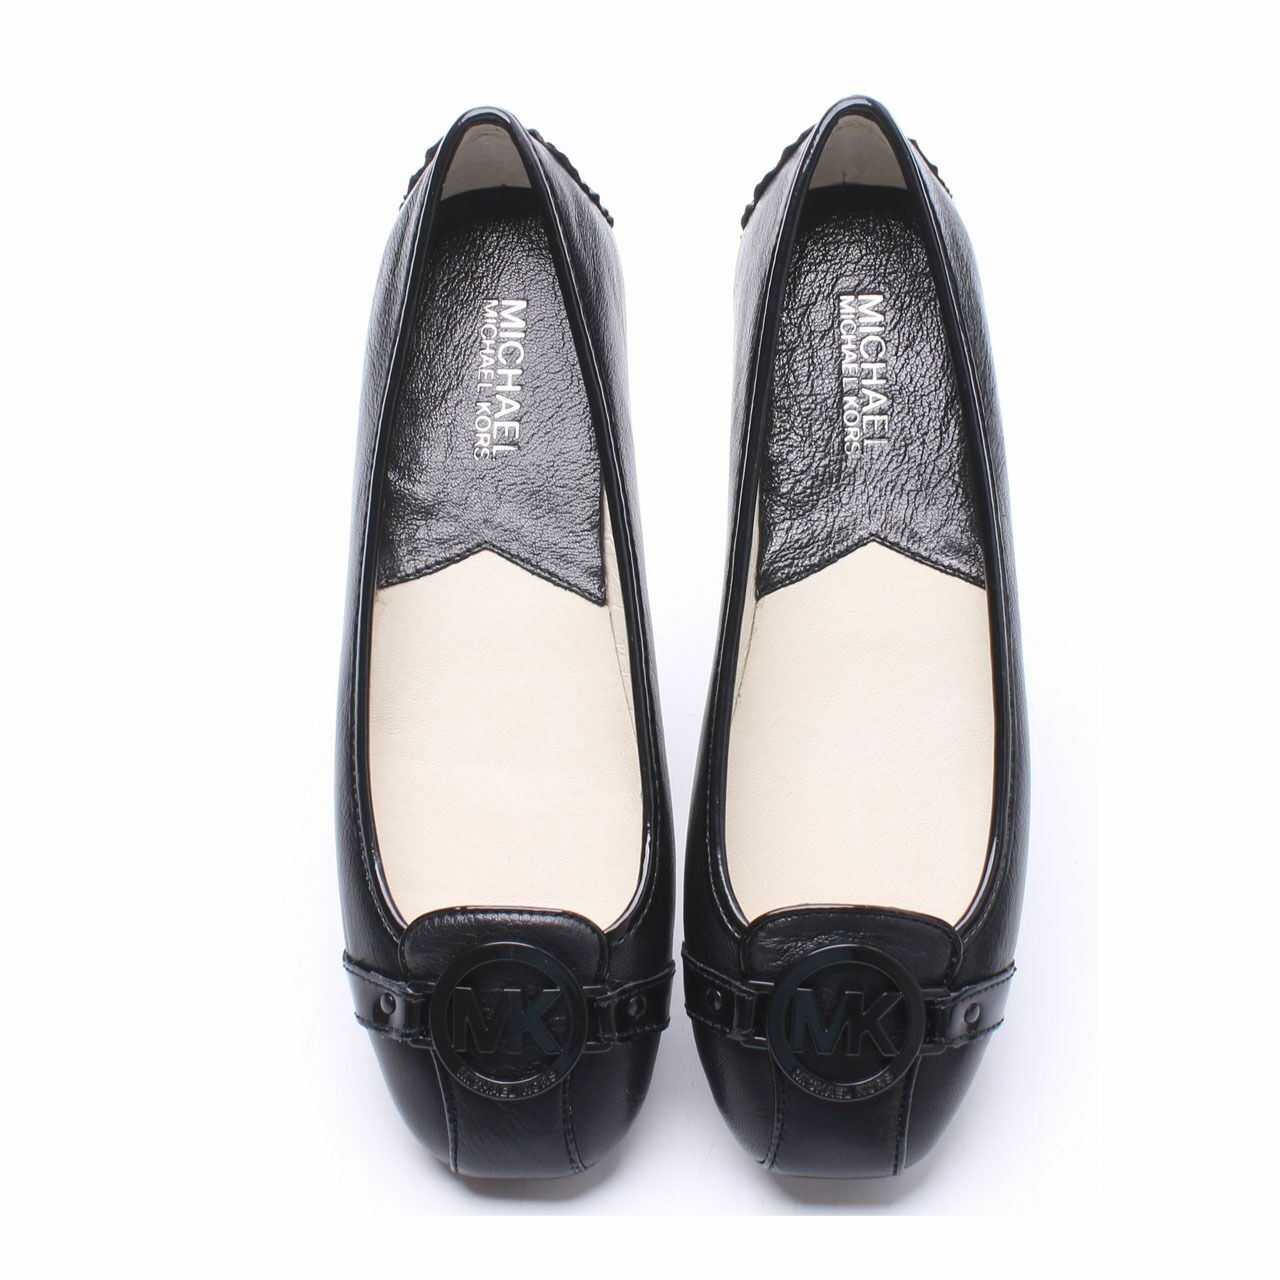 Michael Kors Fulton Moccasin Black Flats Shoes